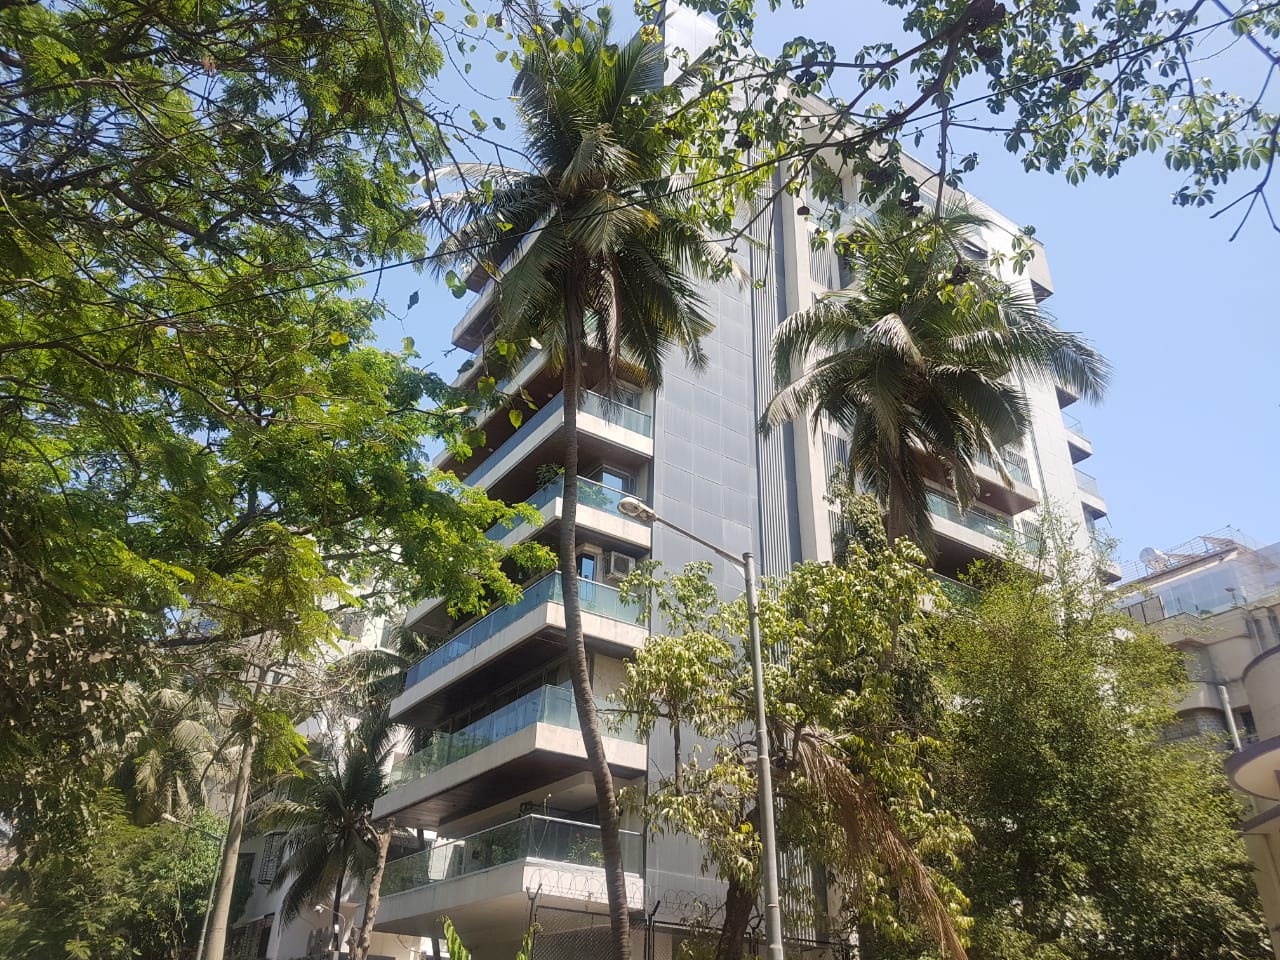 Building - Rustomjee Ciroc, Juhu